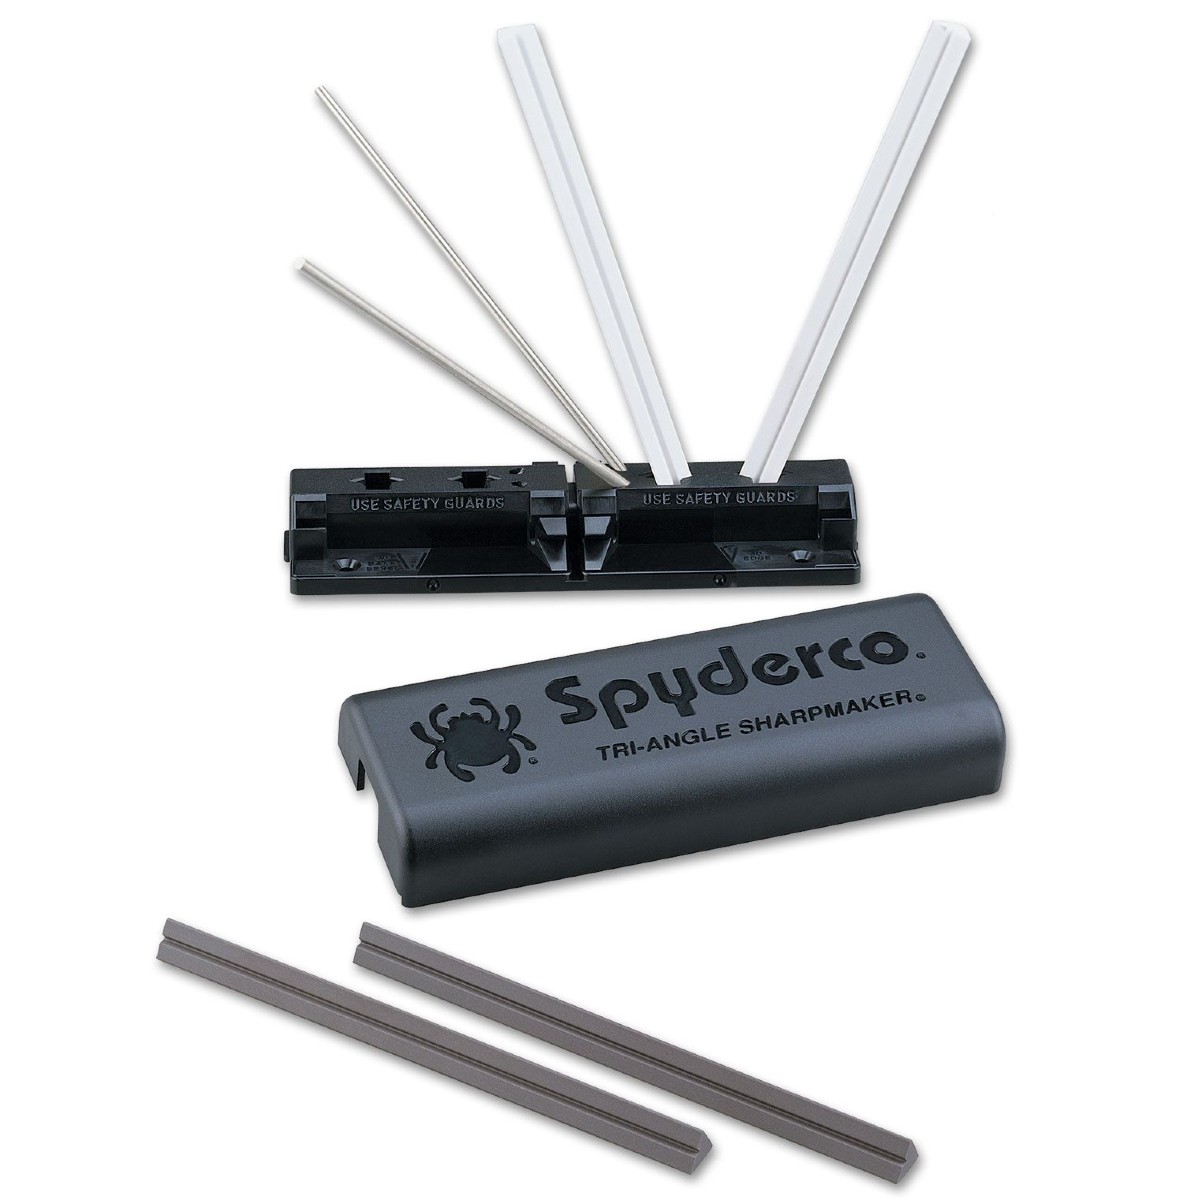 Spyderco-Tri-Angle-Sharpmaker-Complete-Sharpening-System-204MF